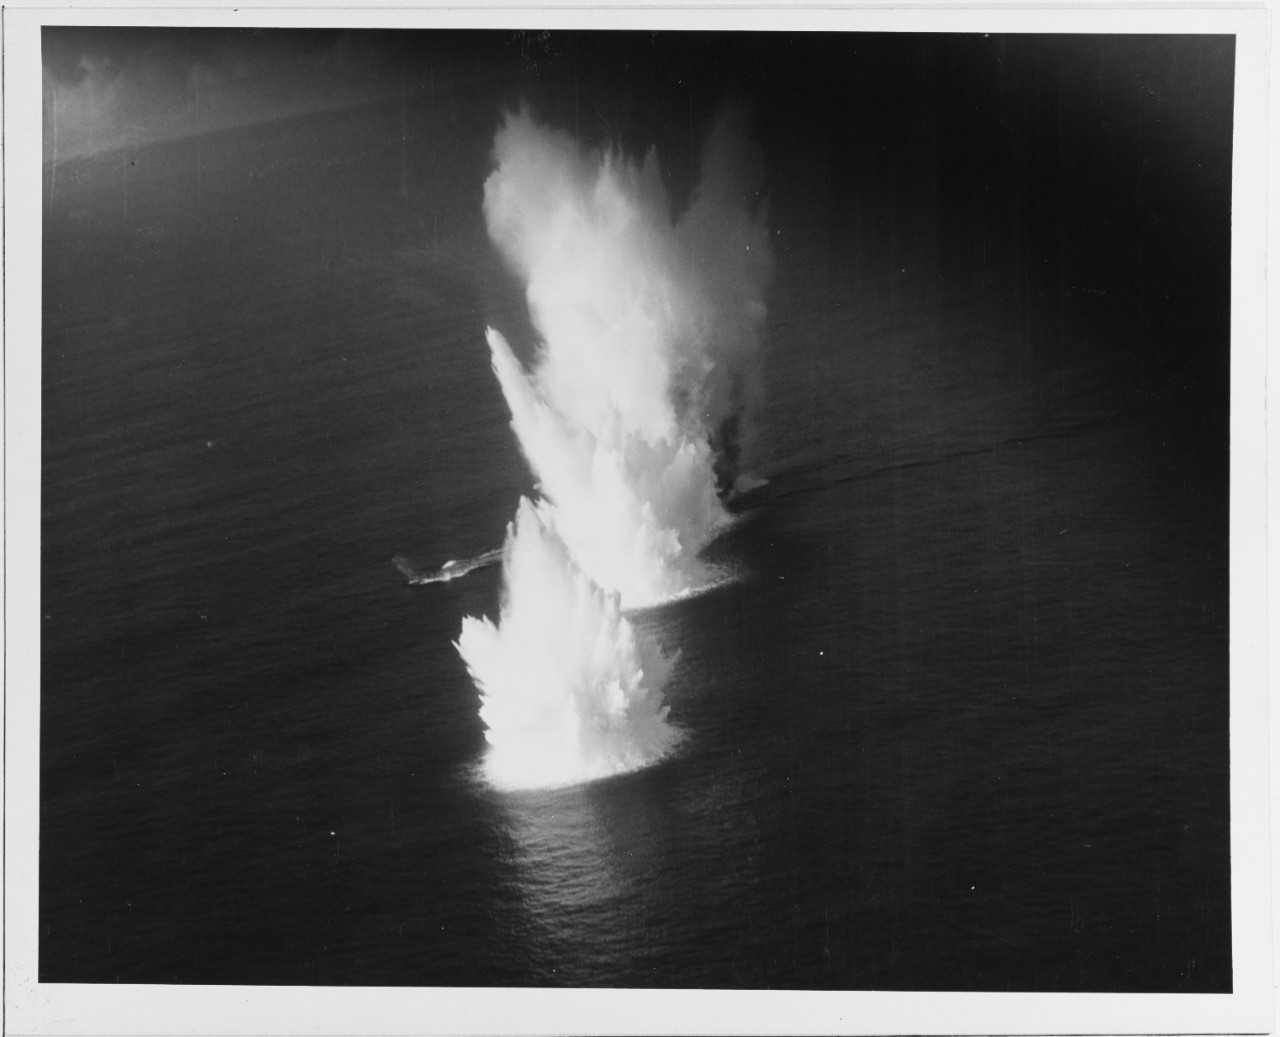 Escort carrier pilot drops three bombs on one Nazi sub.